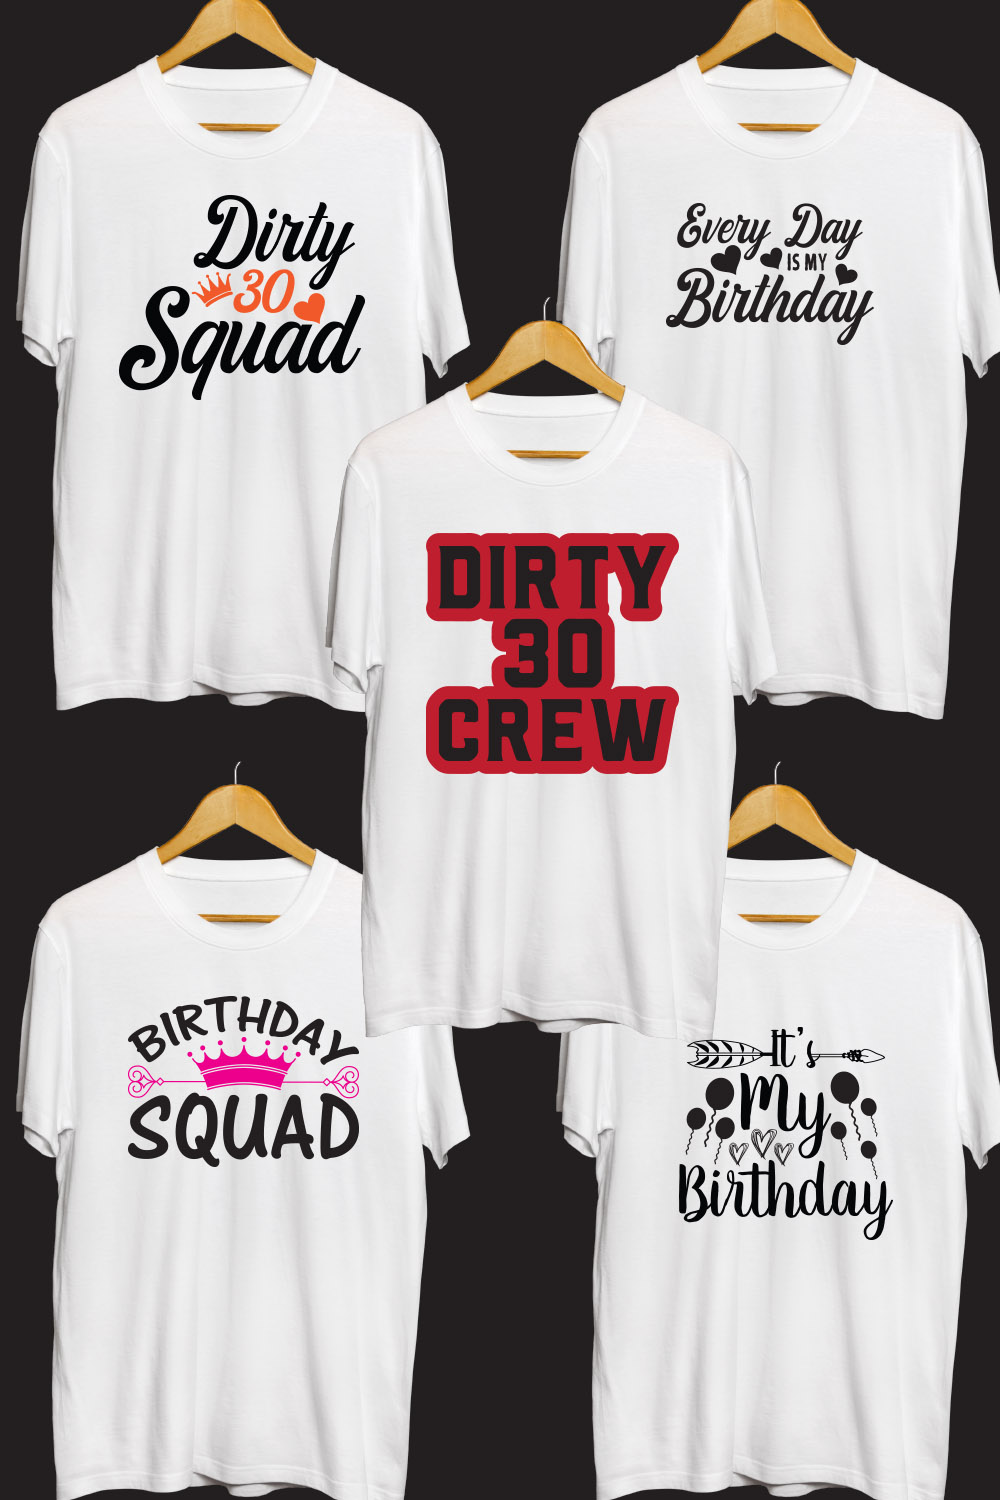 Birthday SVG T Shirt Designs Bundle pinterest preview image.